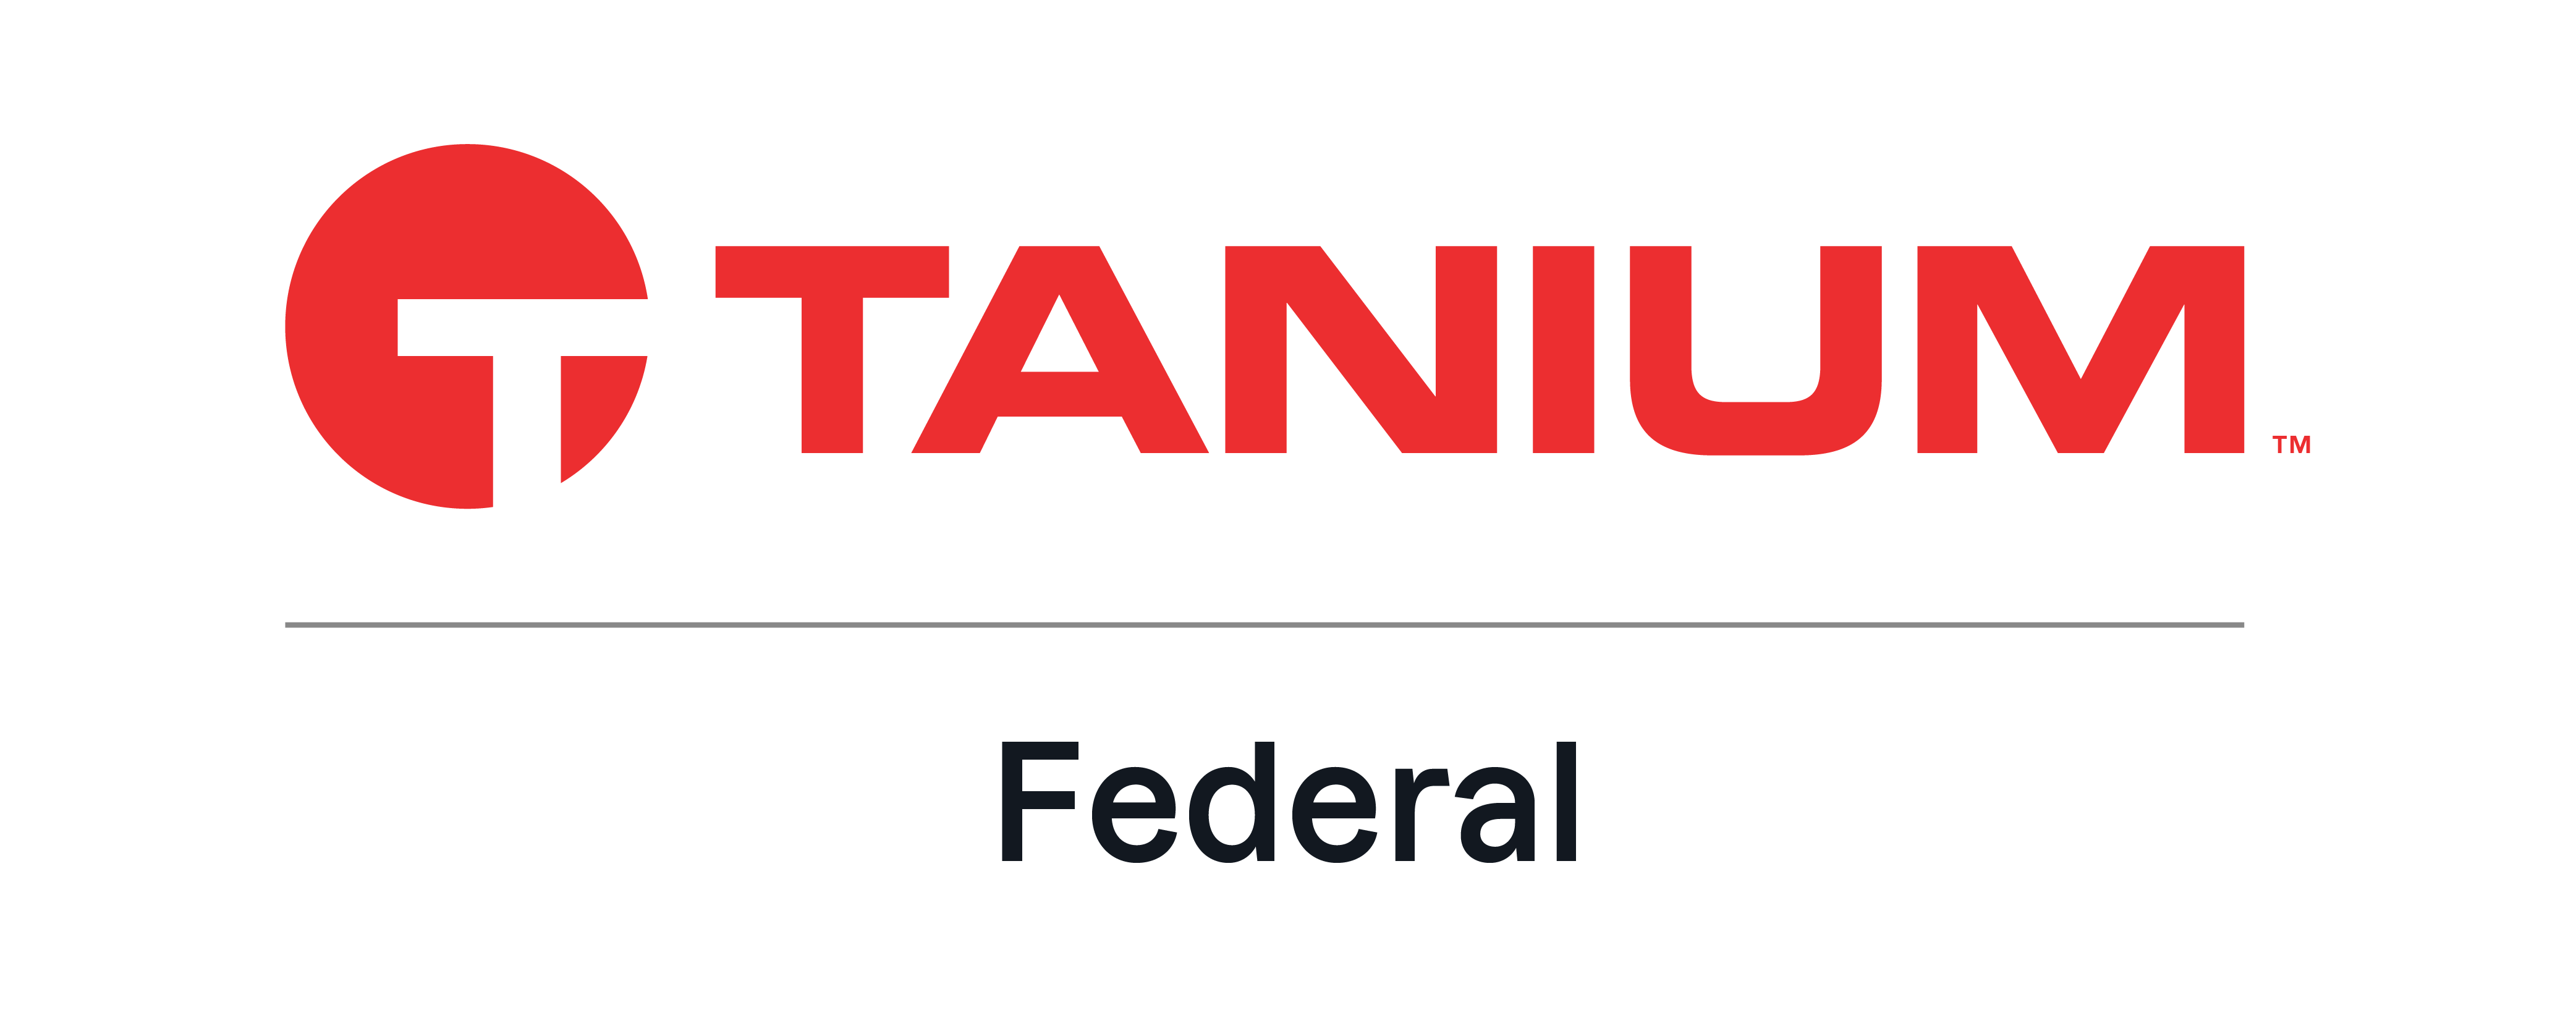 Tanium Federal logo